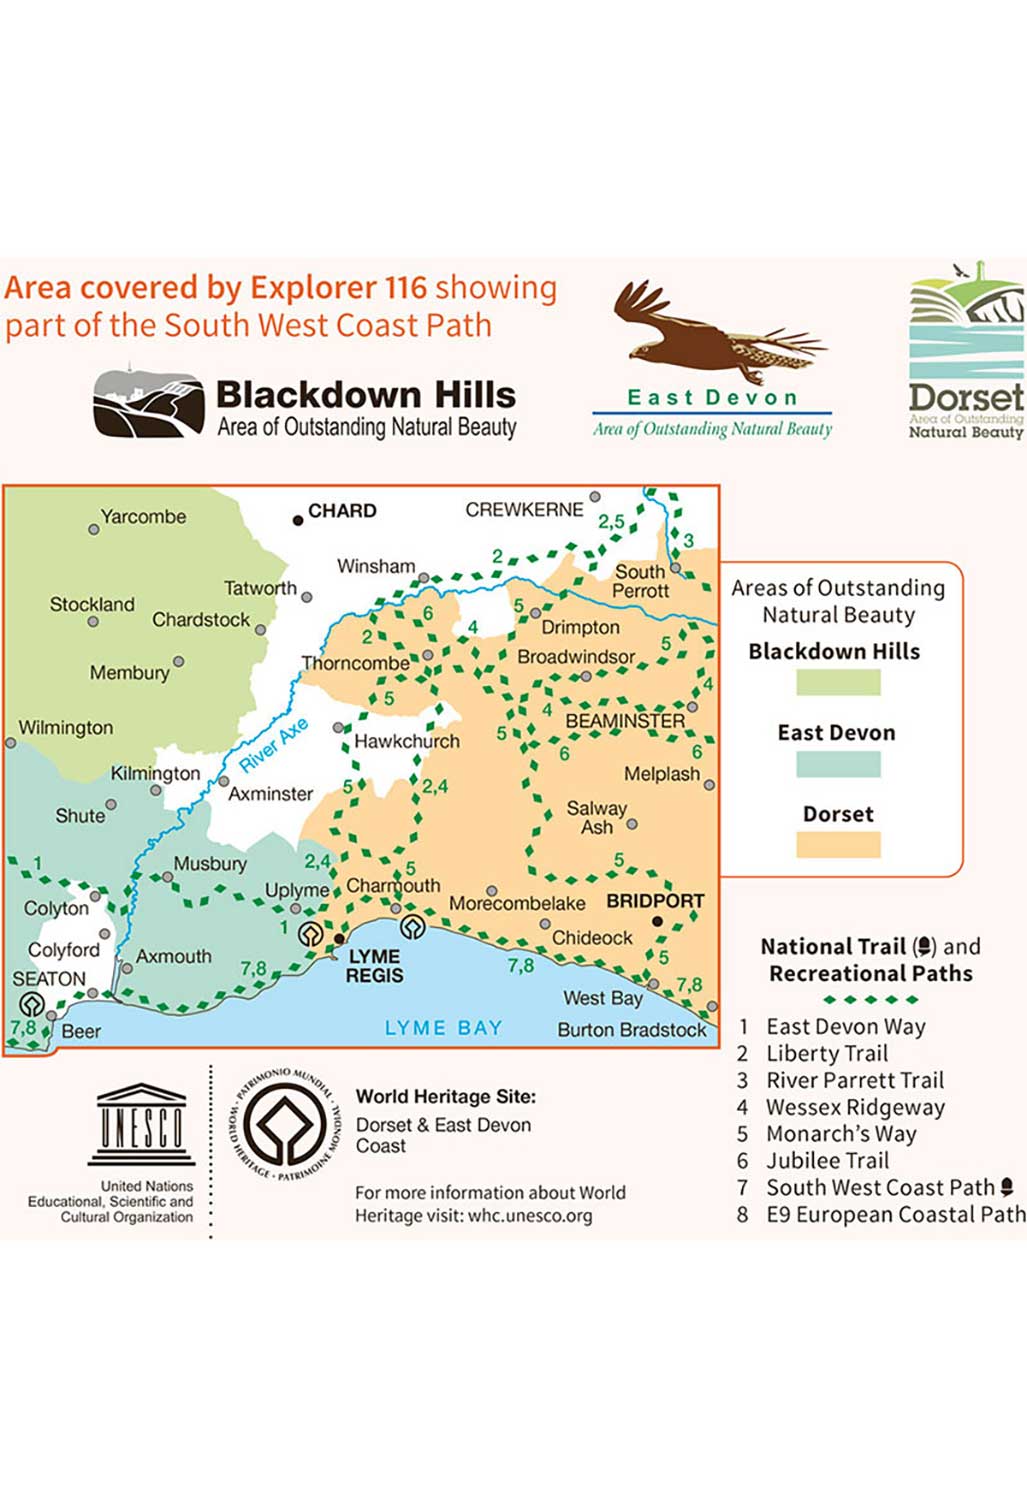 Ordnance Survey Lyme Regis & Bridport - OS Explorer 116 Map